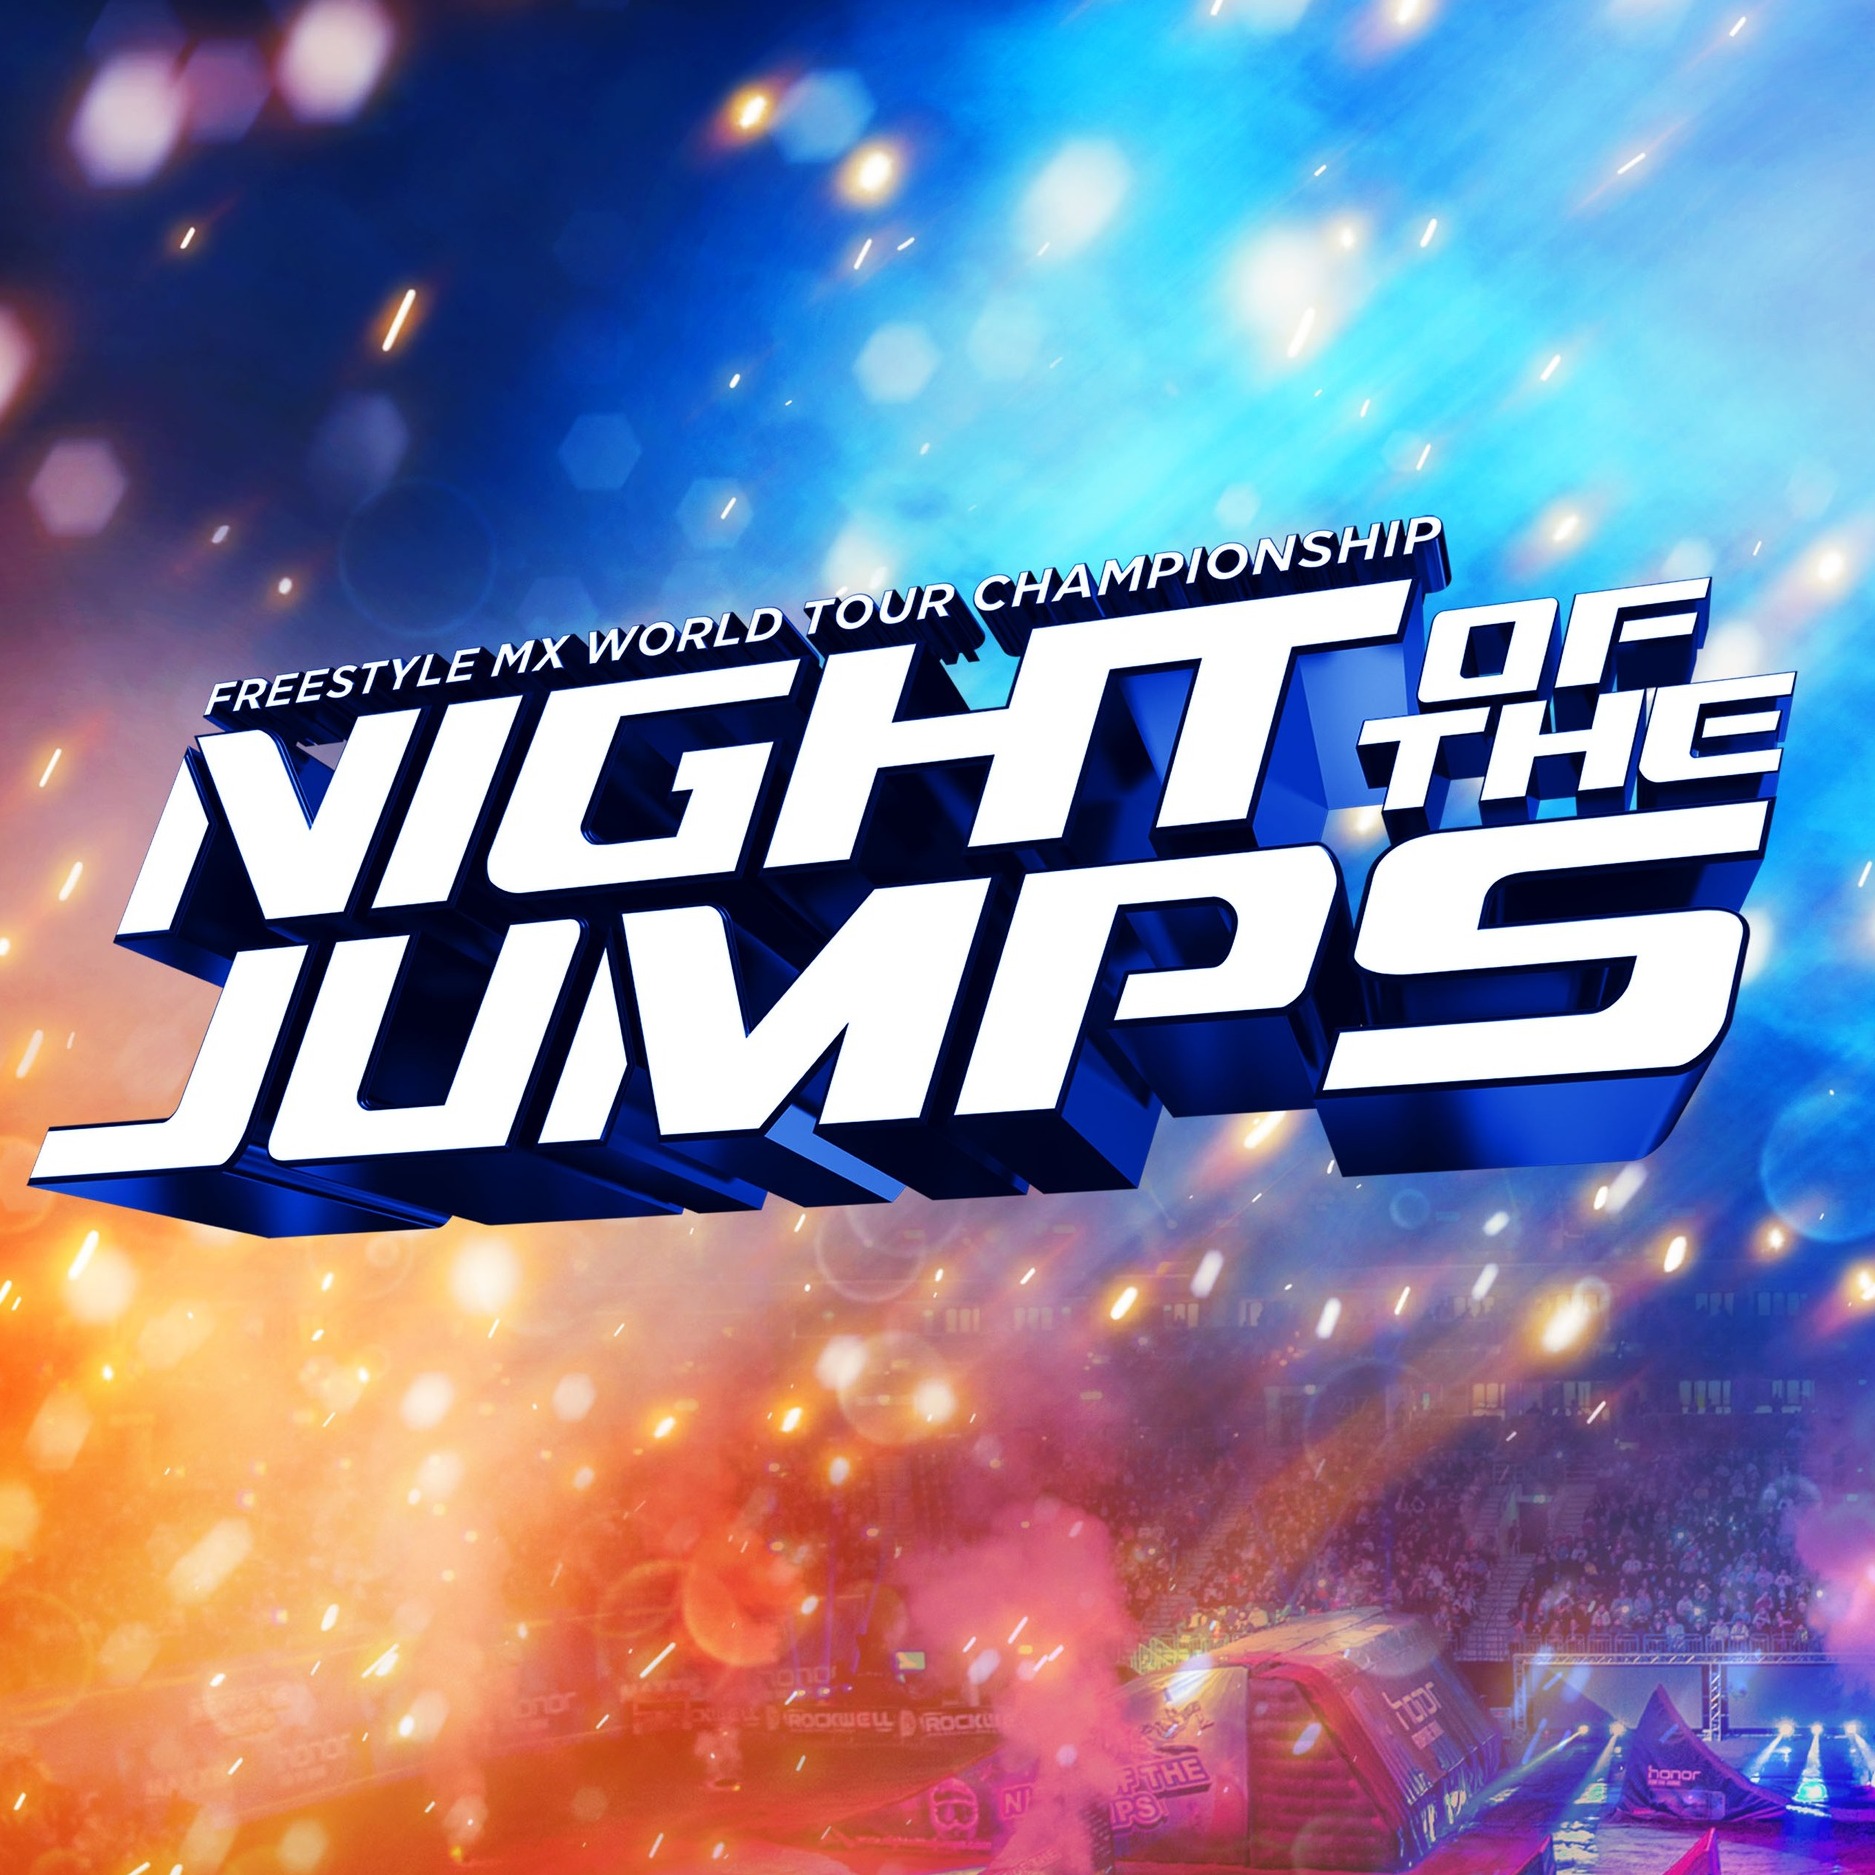 Billets Night of the Jumps (OVB Arena - Breme)